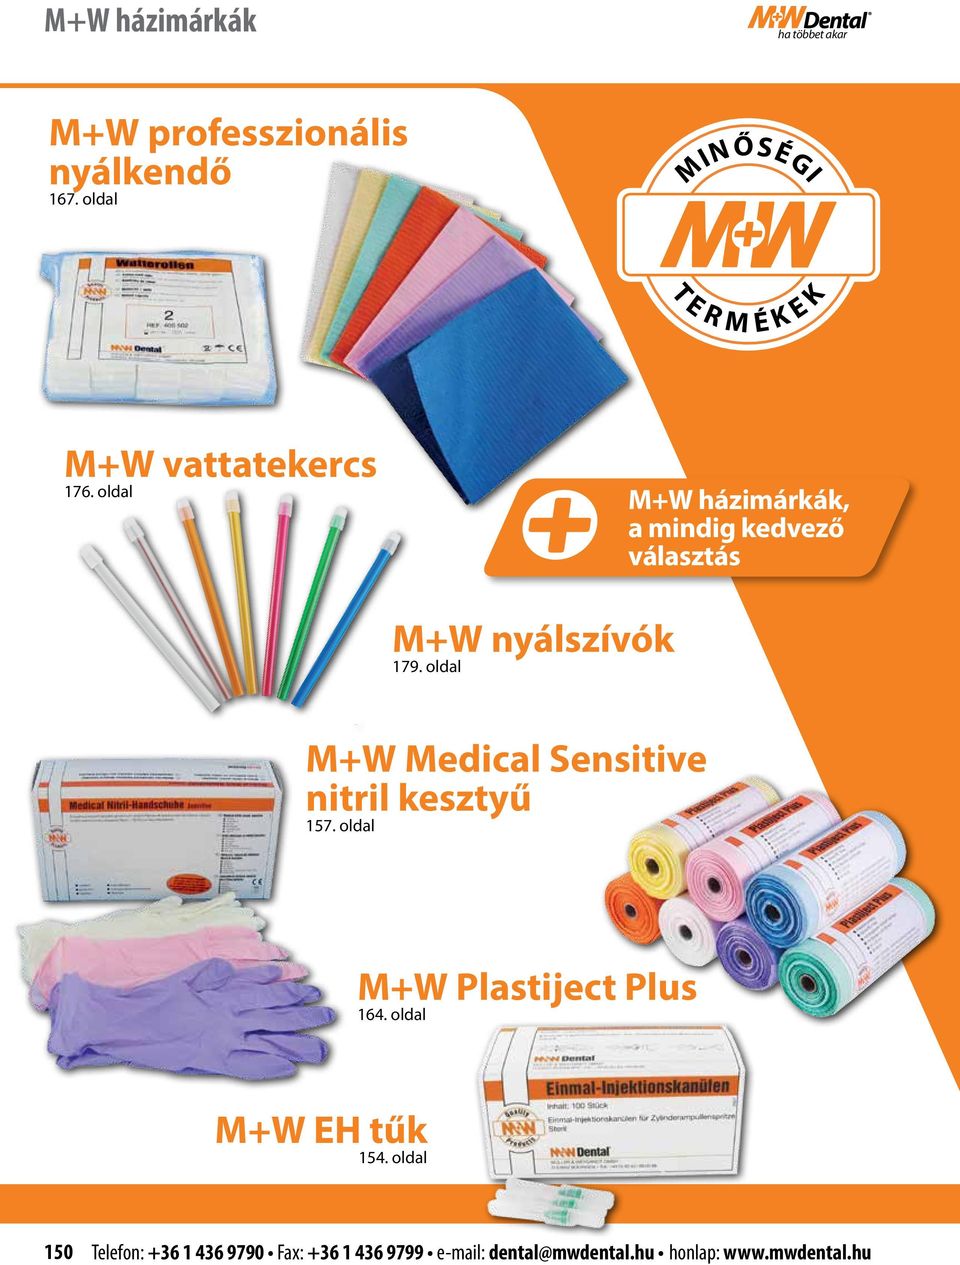 oldal M+W Medical Sensitive nitril kesztyű 17. oldal M+W Plastiject Plus 164.